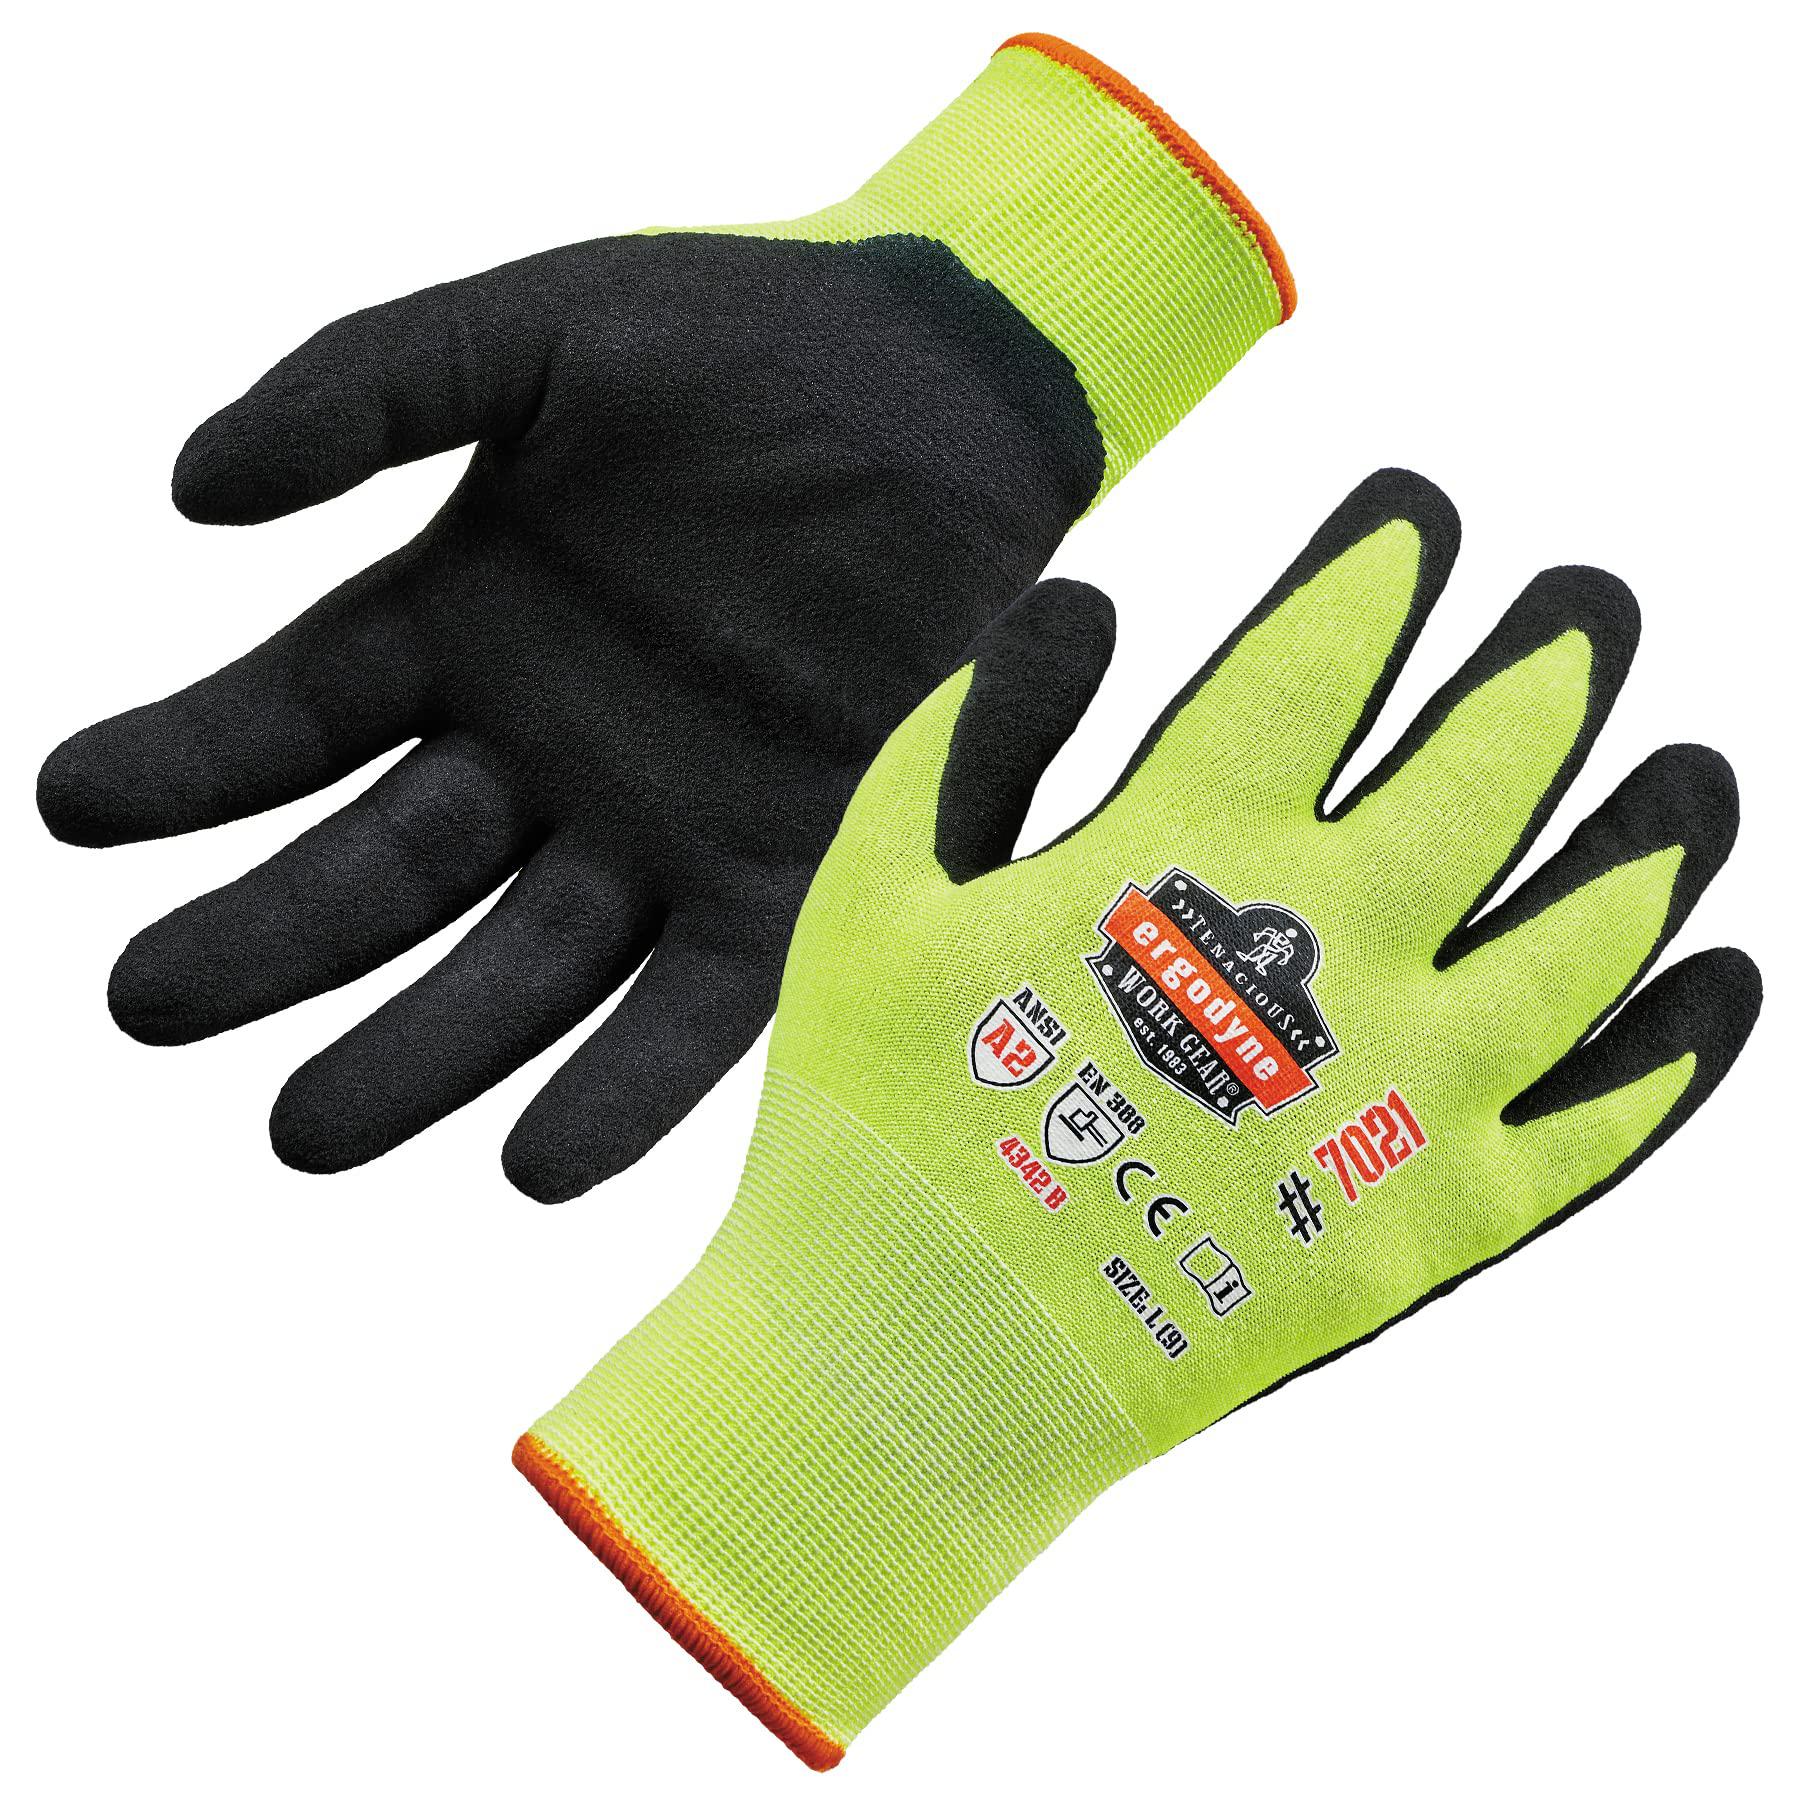 ergodyne - 7021 m lime nit-coat cut-resis gloves a2 level wsx (17963)